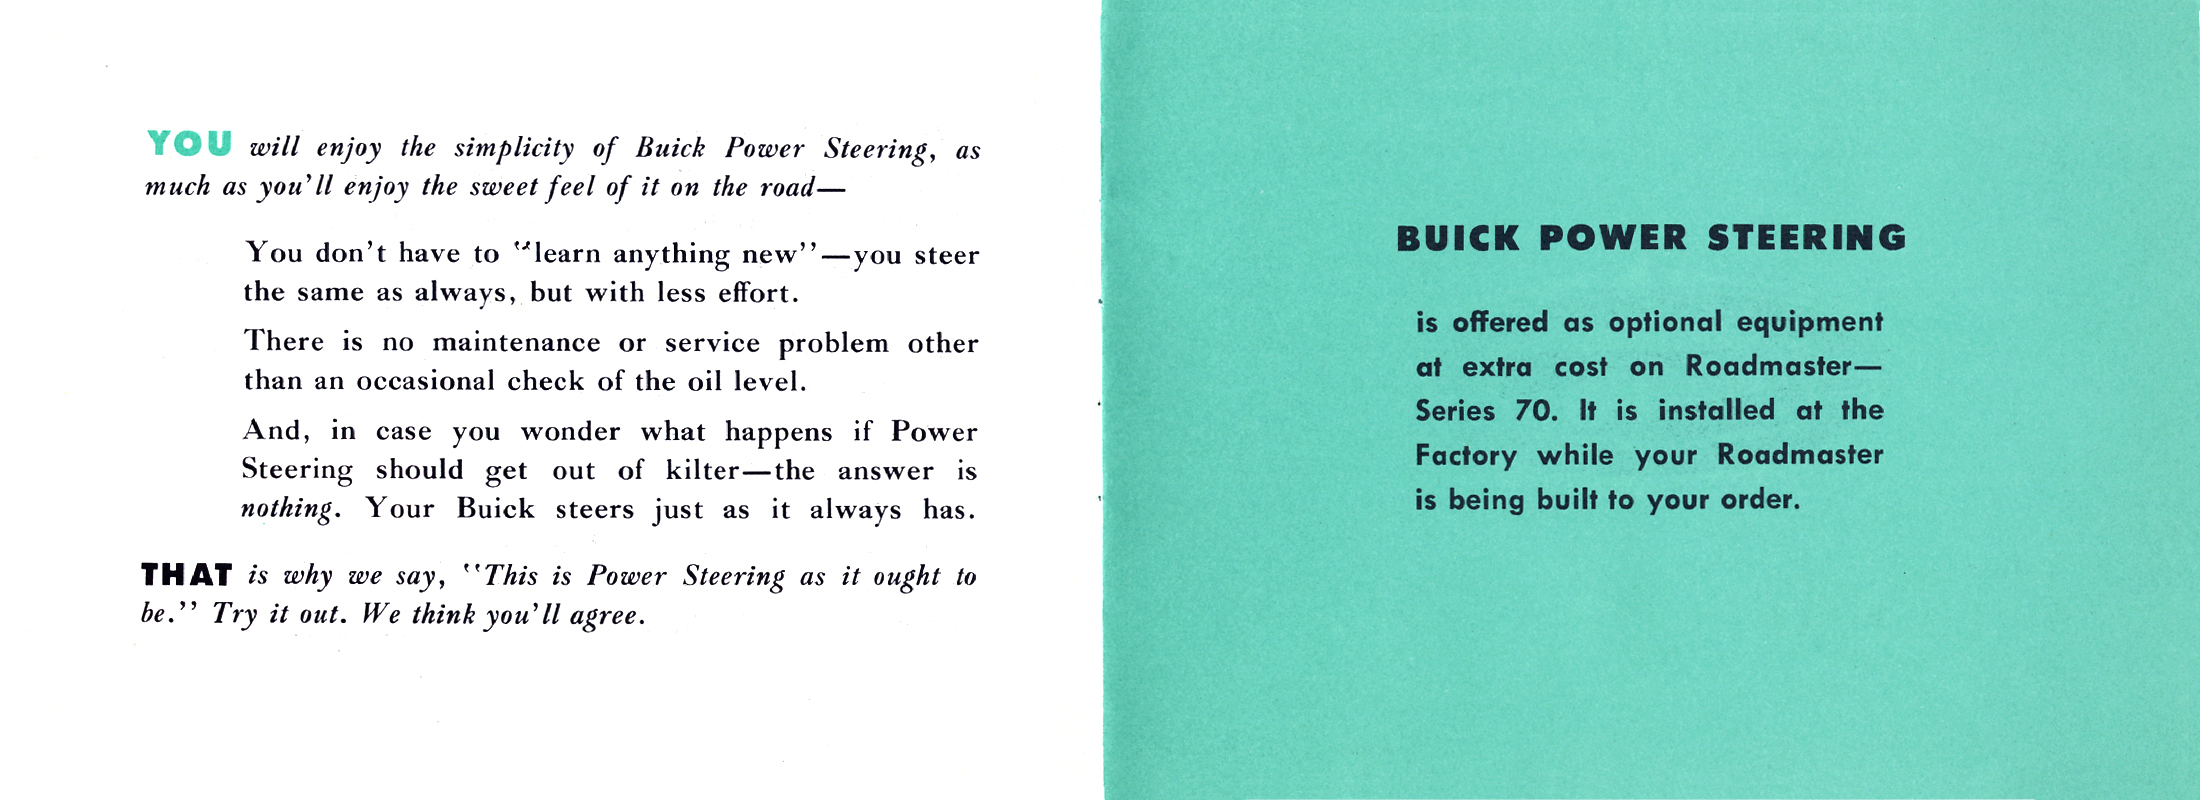 1952 Buick Power Steering Folder-06-07